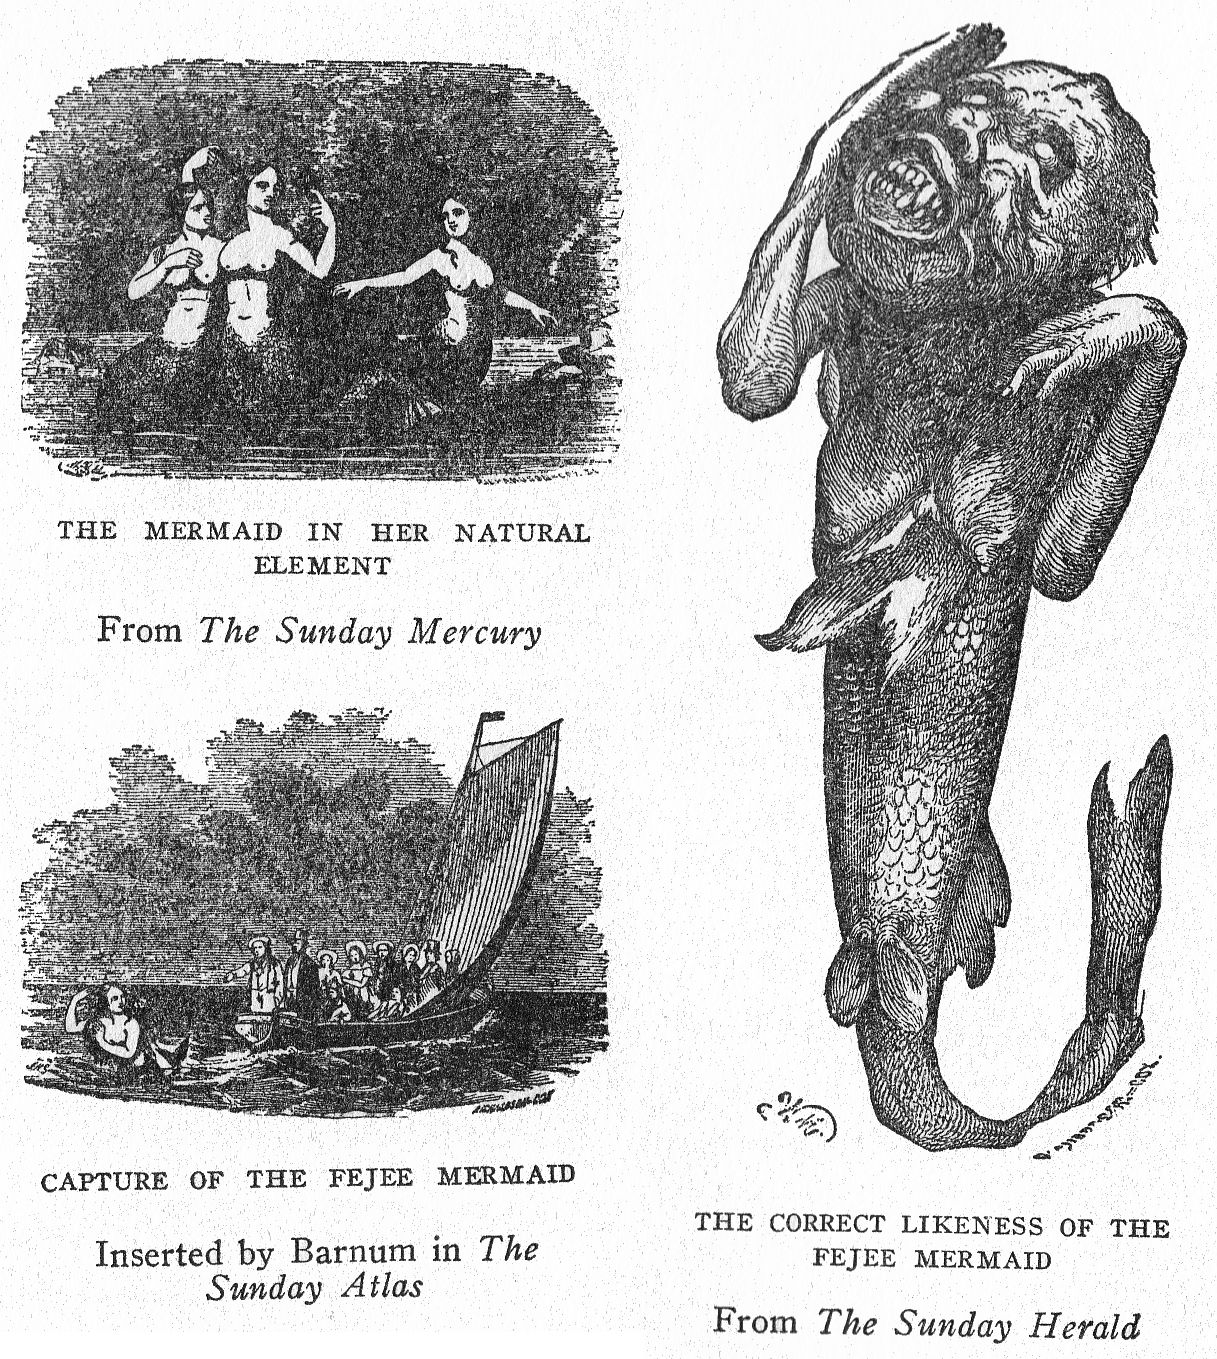 http://messybeast.com/captive-animals/1923-werner-3.jpg